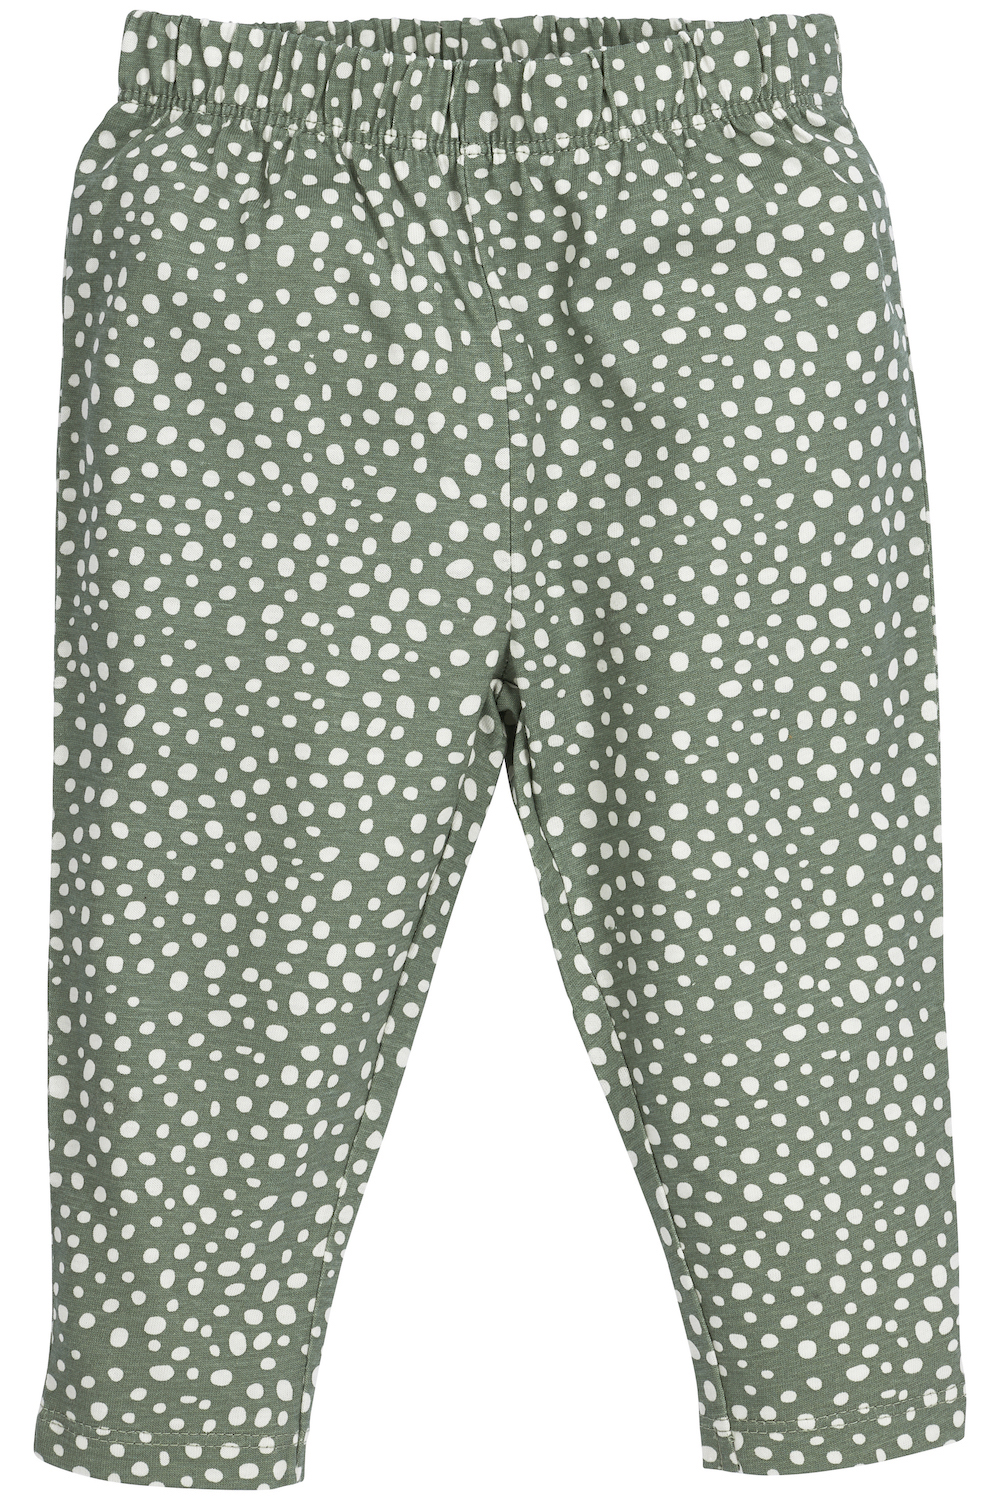 Baby Pyjama 2er pack Cheetah - forest green - 50/56